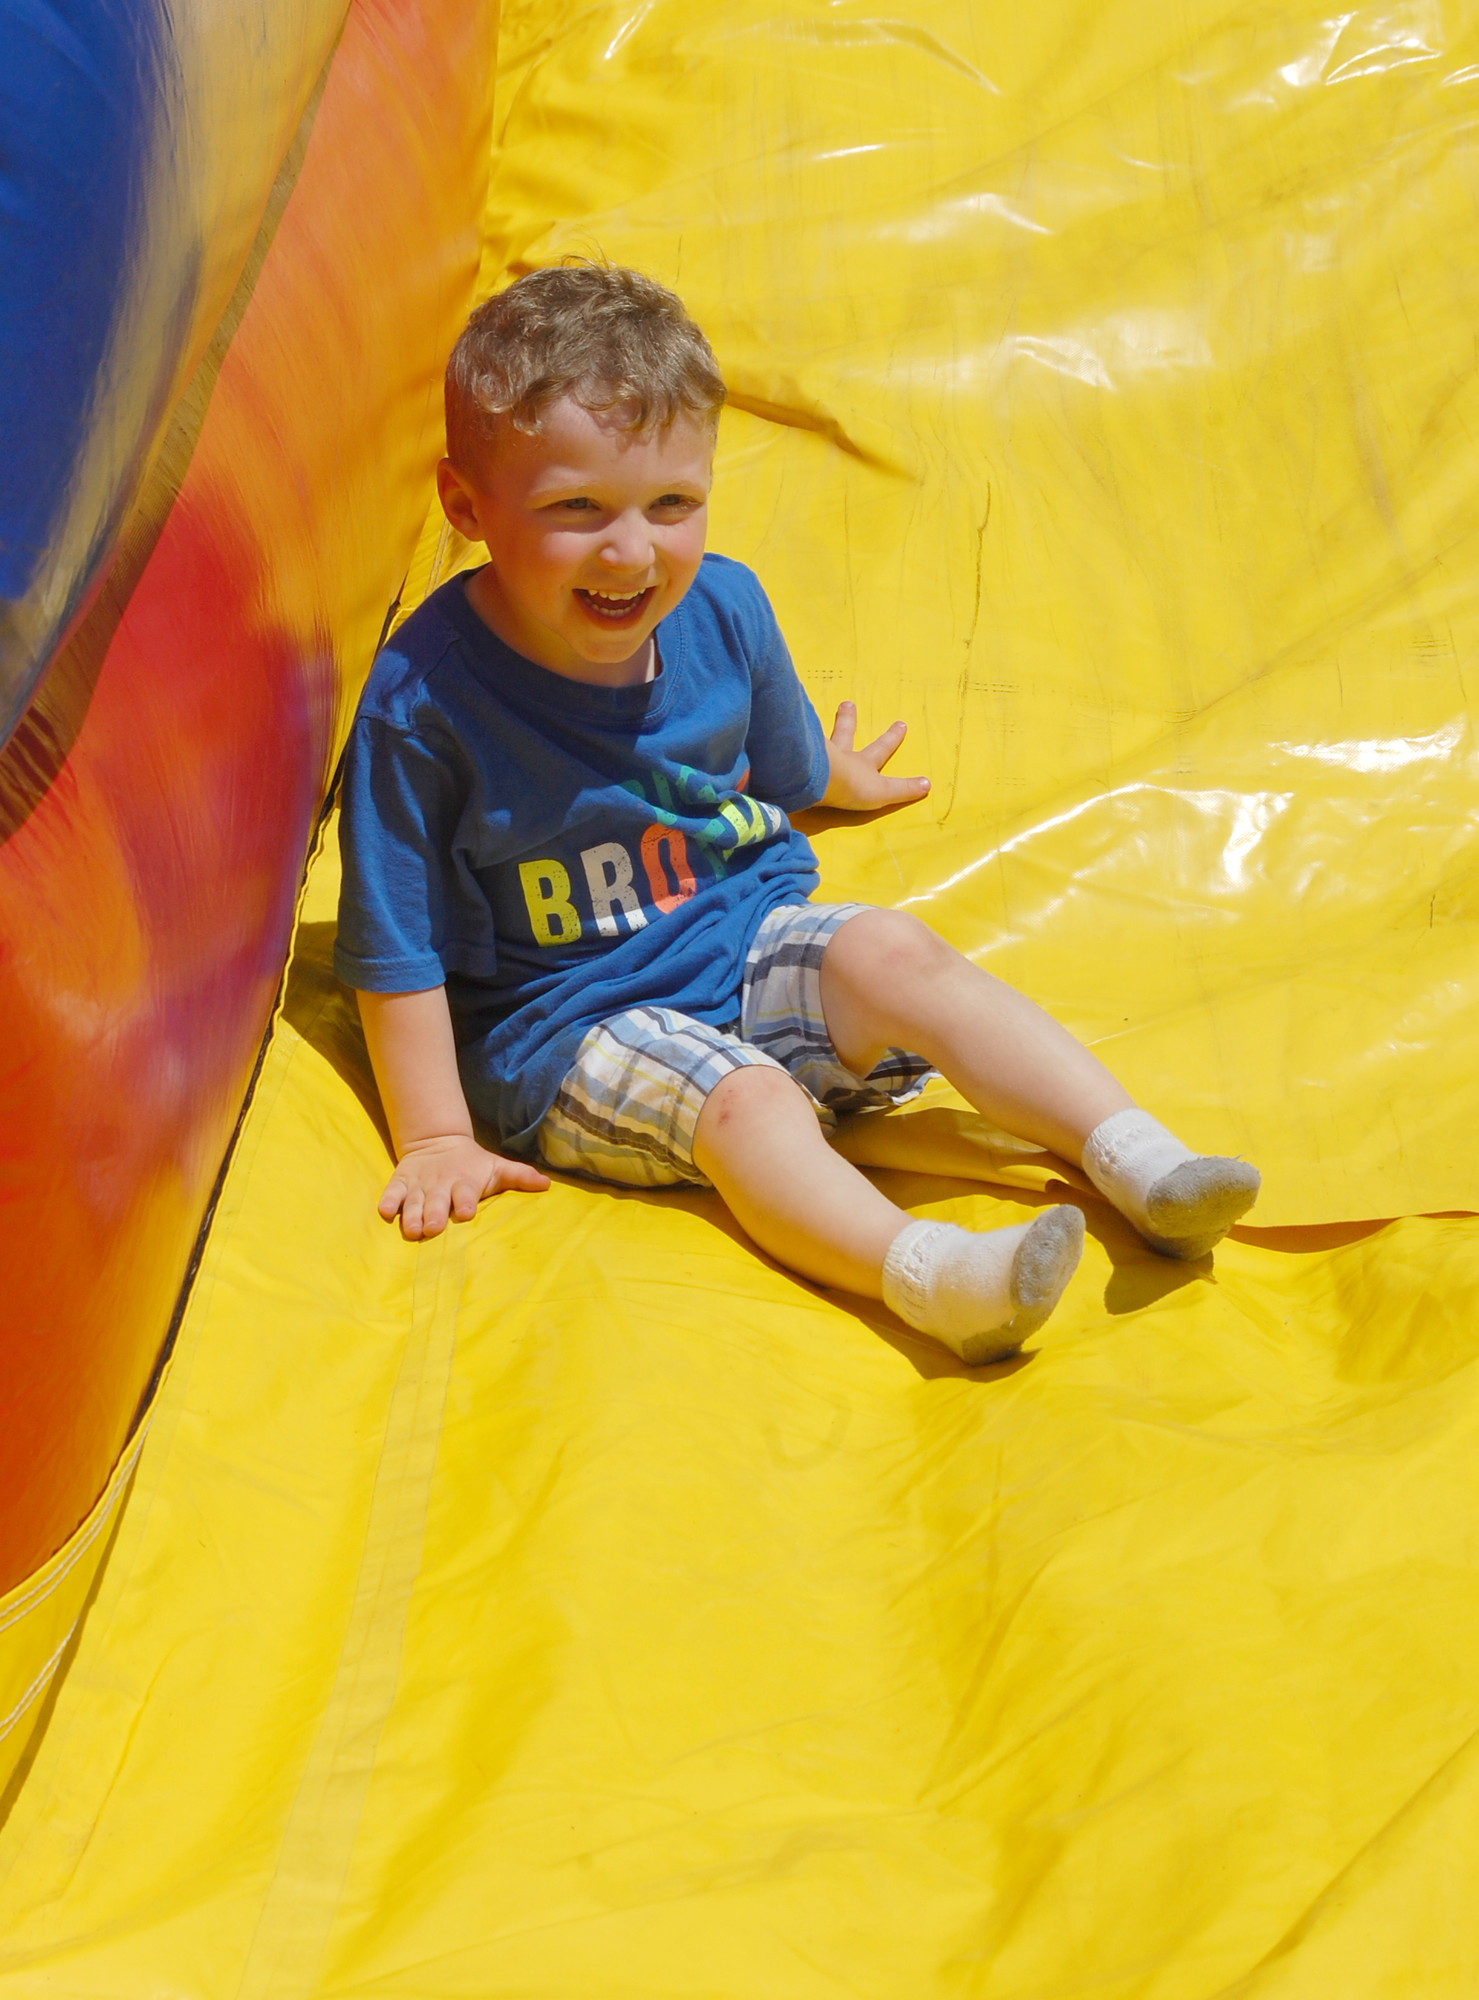 Jack Kearney, 3, took a trip down the inflatable slide.